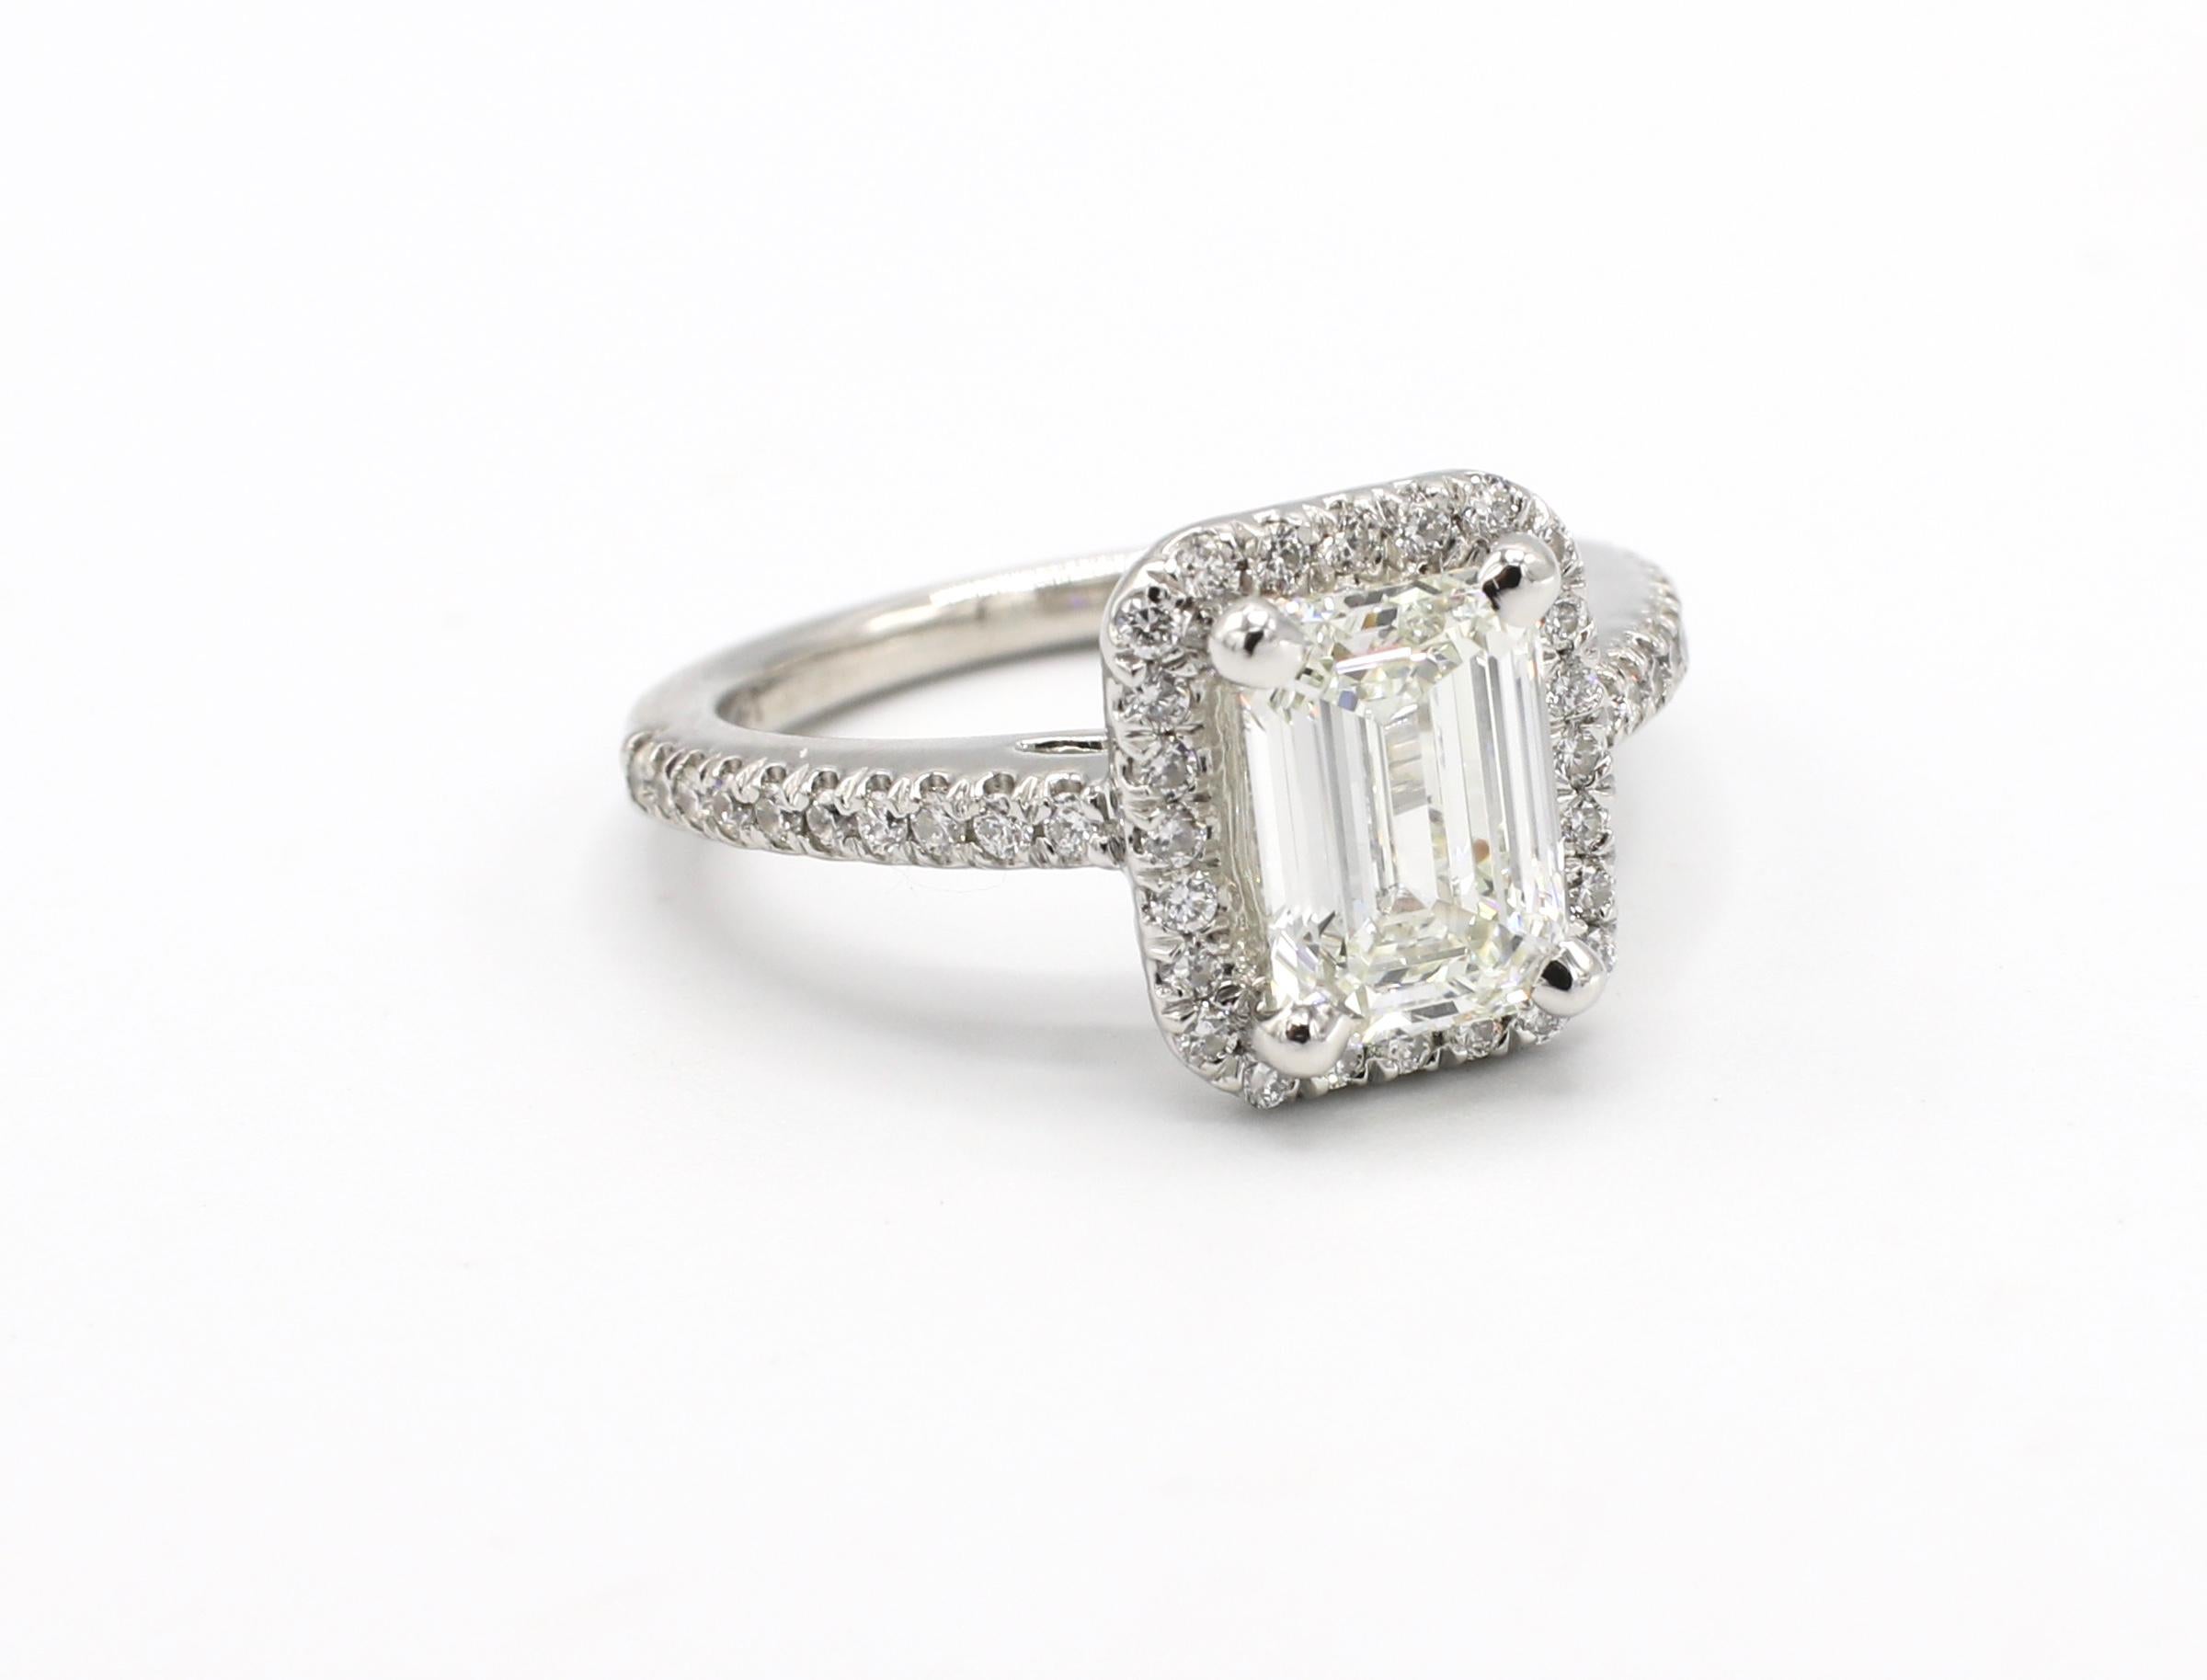 Modern GIA Certified 1.43 Carat I IF Emerald Cut Halo Diamond Engagement Ring